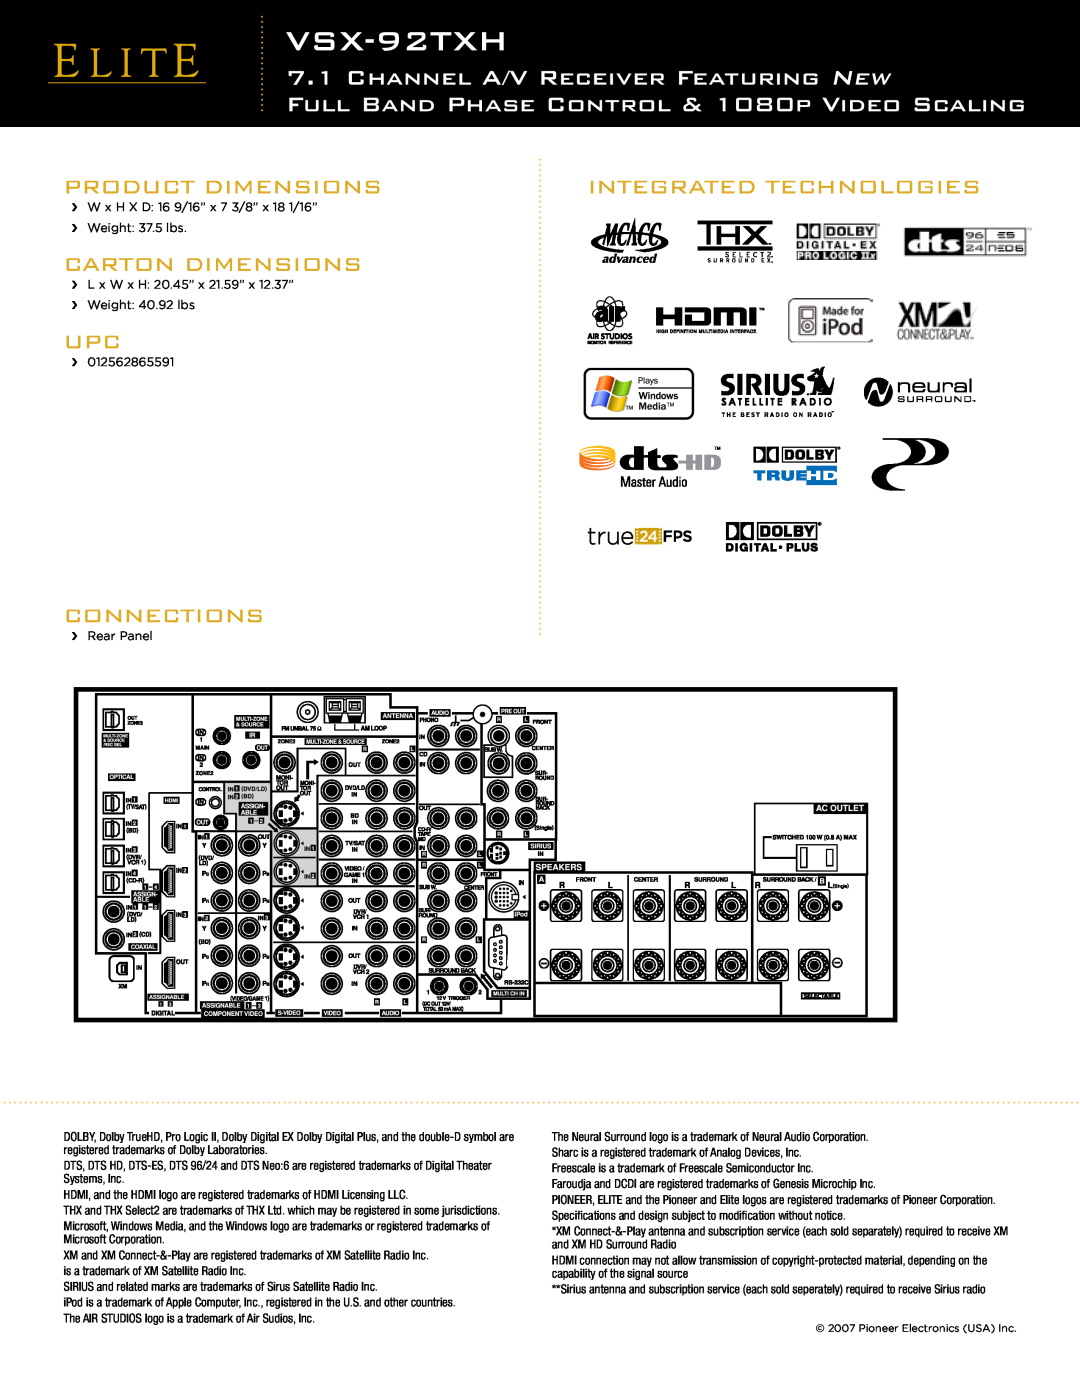 Elite VSX-92TXH manual Product Dimensions, Integrated Technologies, Carton Dimensions, Connections 